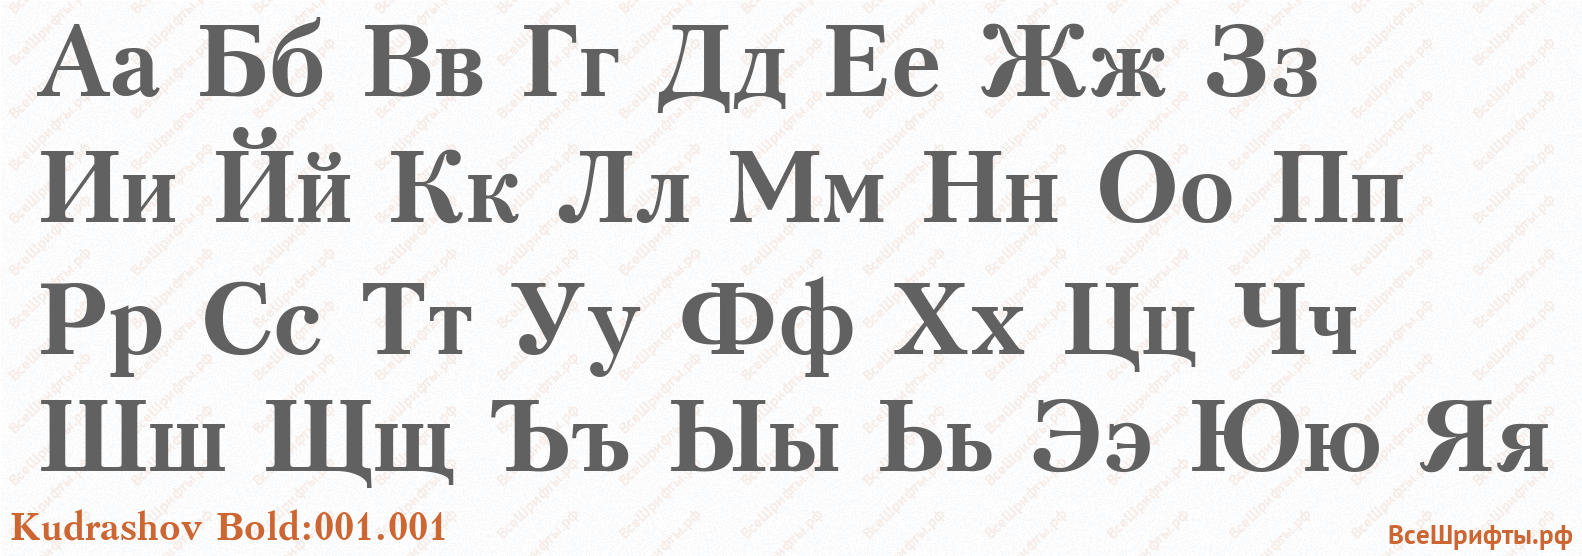 Шрифт Kudrashov Bold:001.001 с русскими буквами